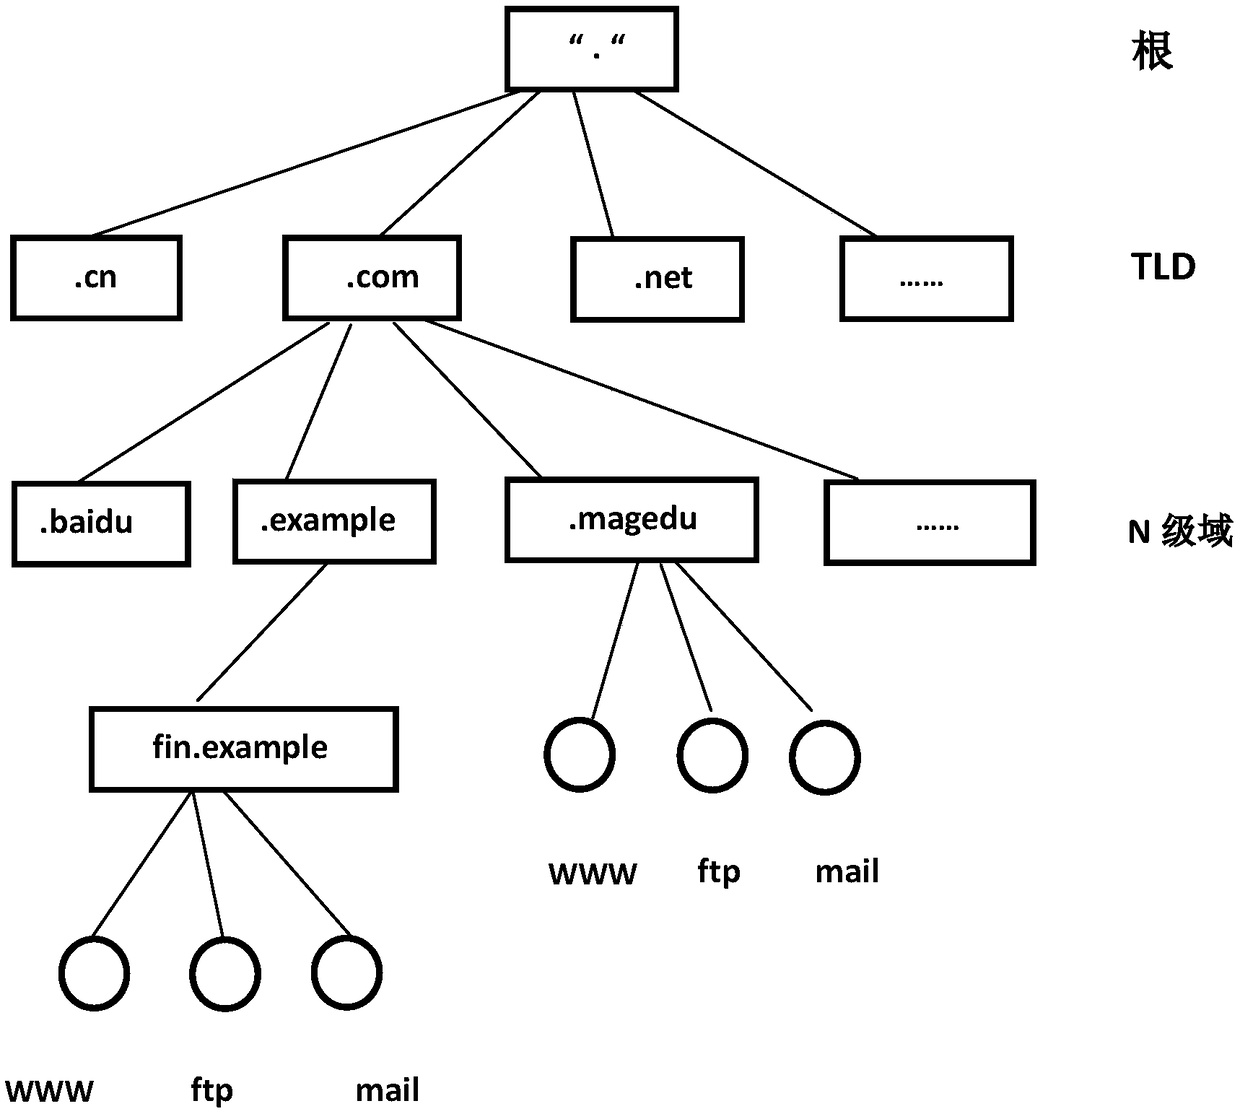 Method for resolving root domain name